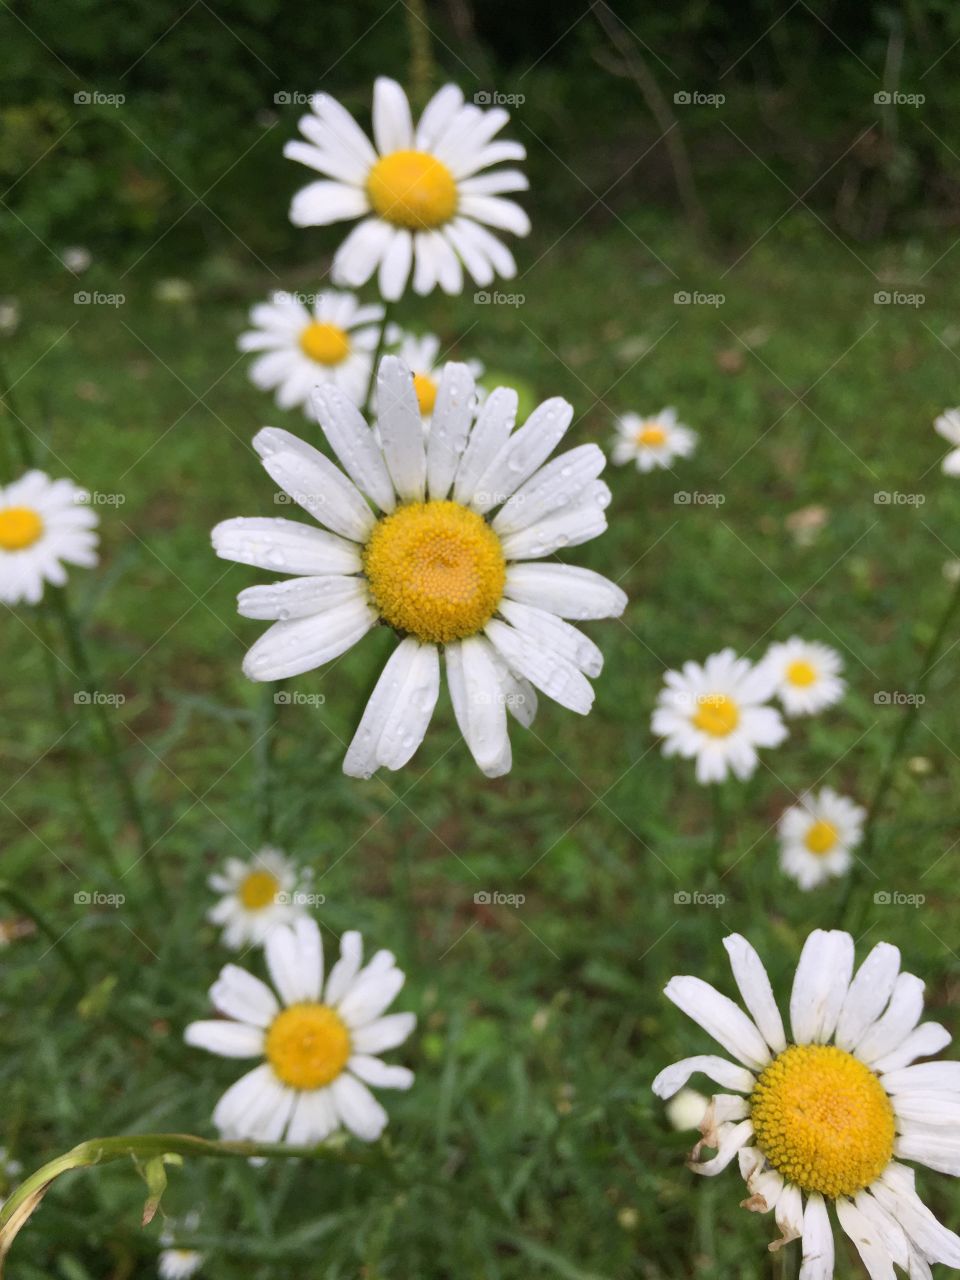 Daisy daisy in the summer time 